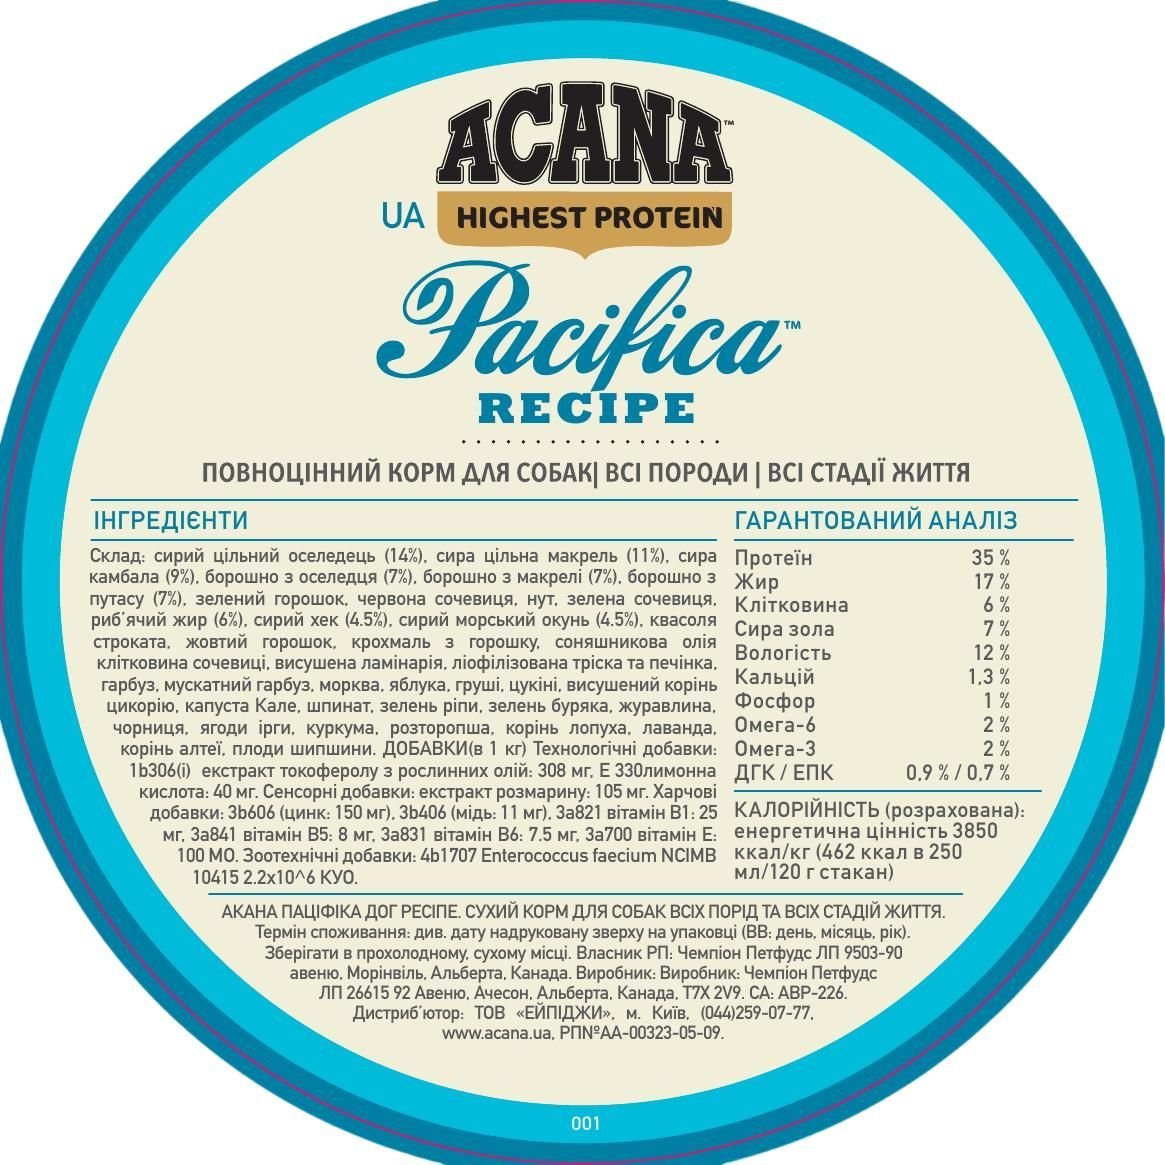 Сухий корм для собак Acana Pacifica Dog Recipe, 11.4 кг - фото 6